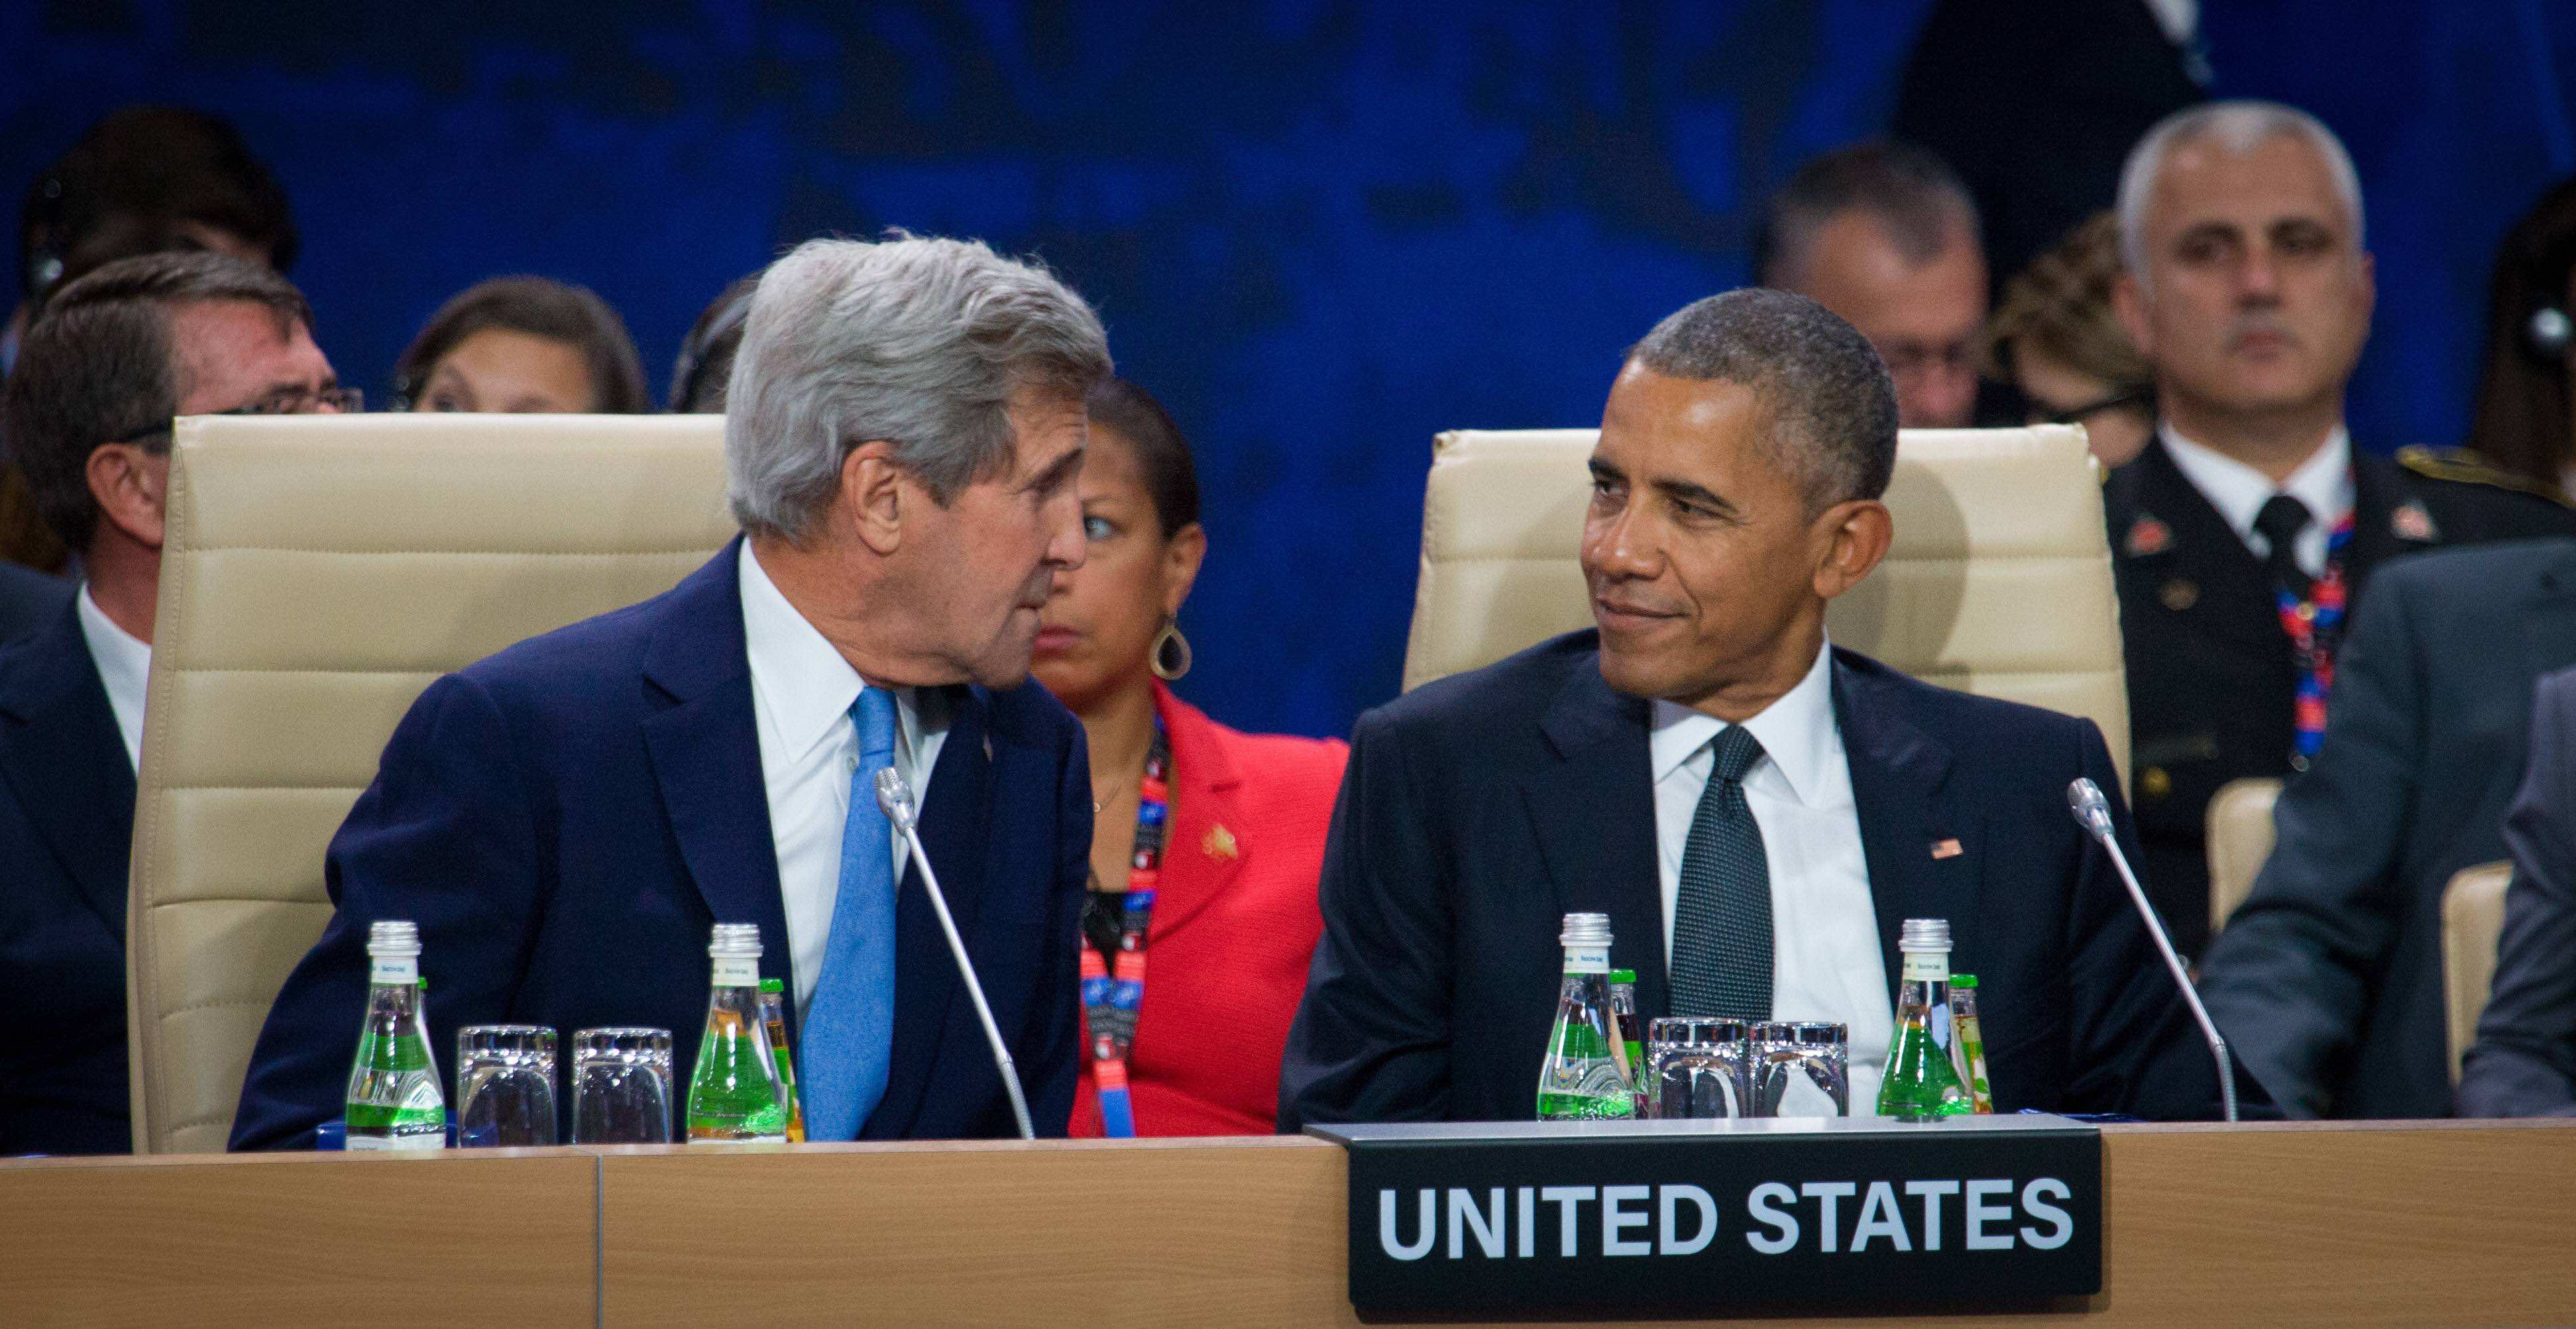 20201124-image-imago-morning briefing-Kerry Obama